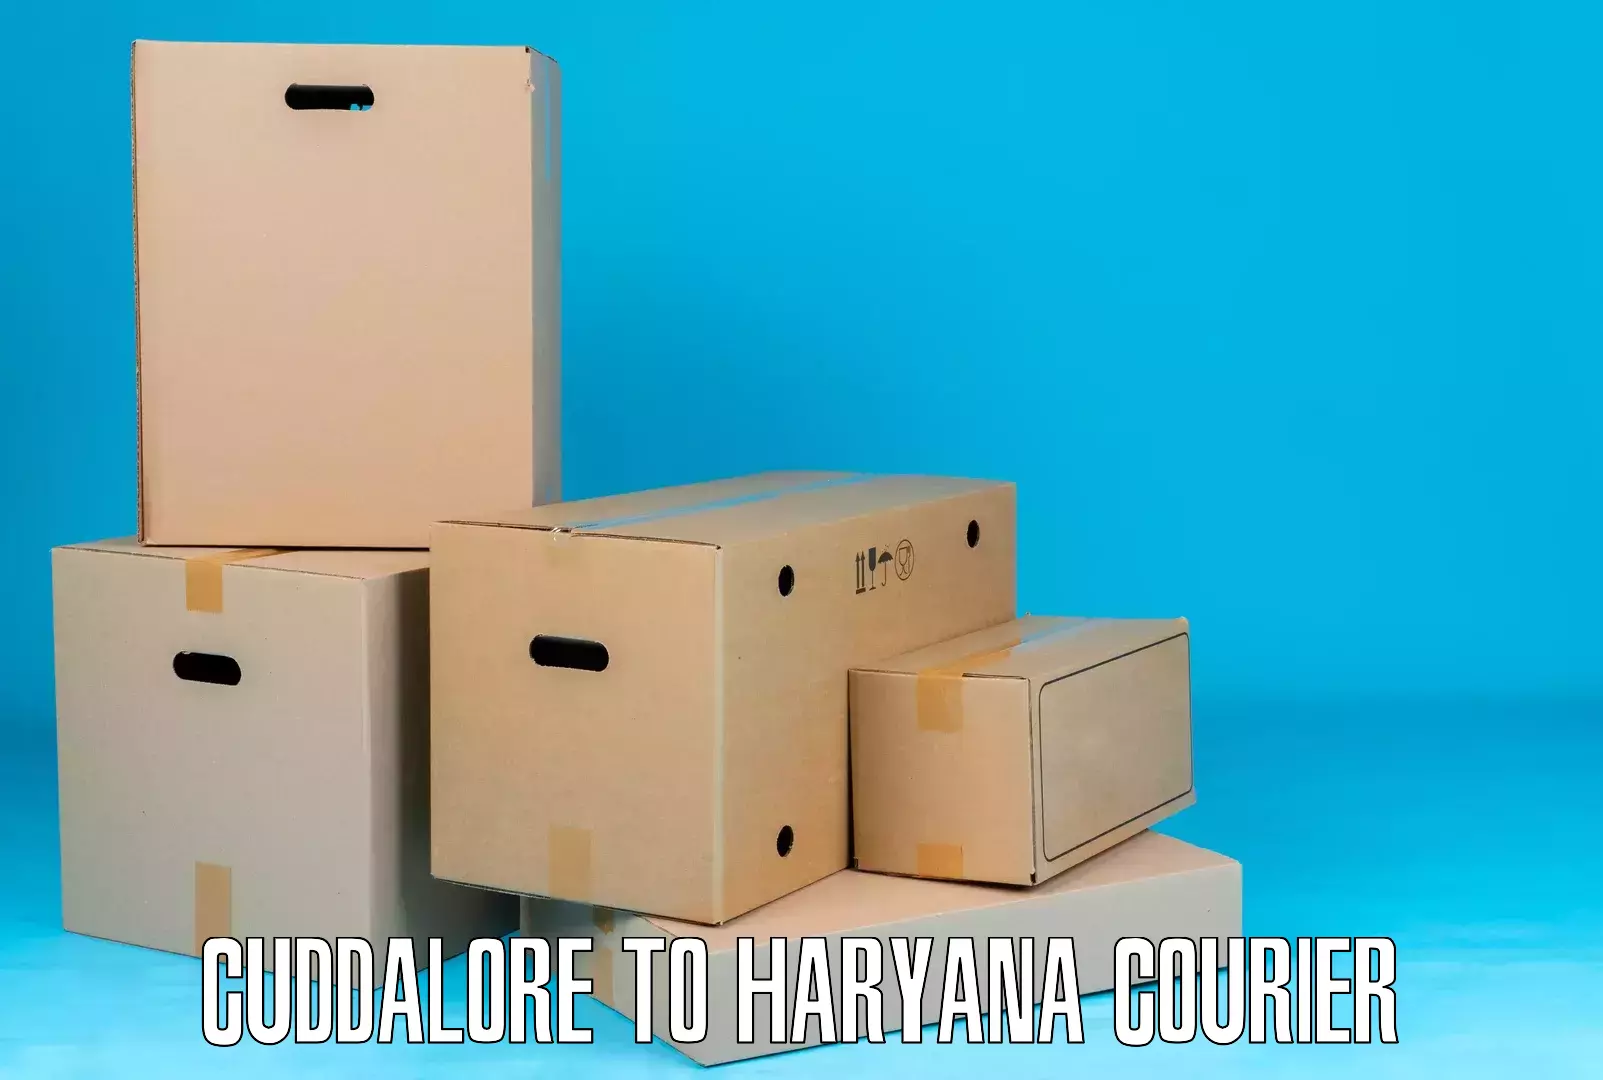 Logistics service provider Cuddalore to Haryana